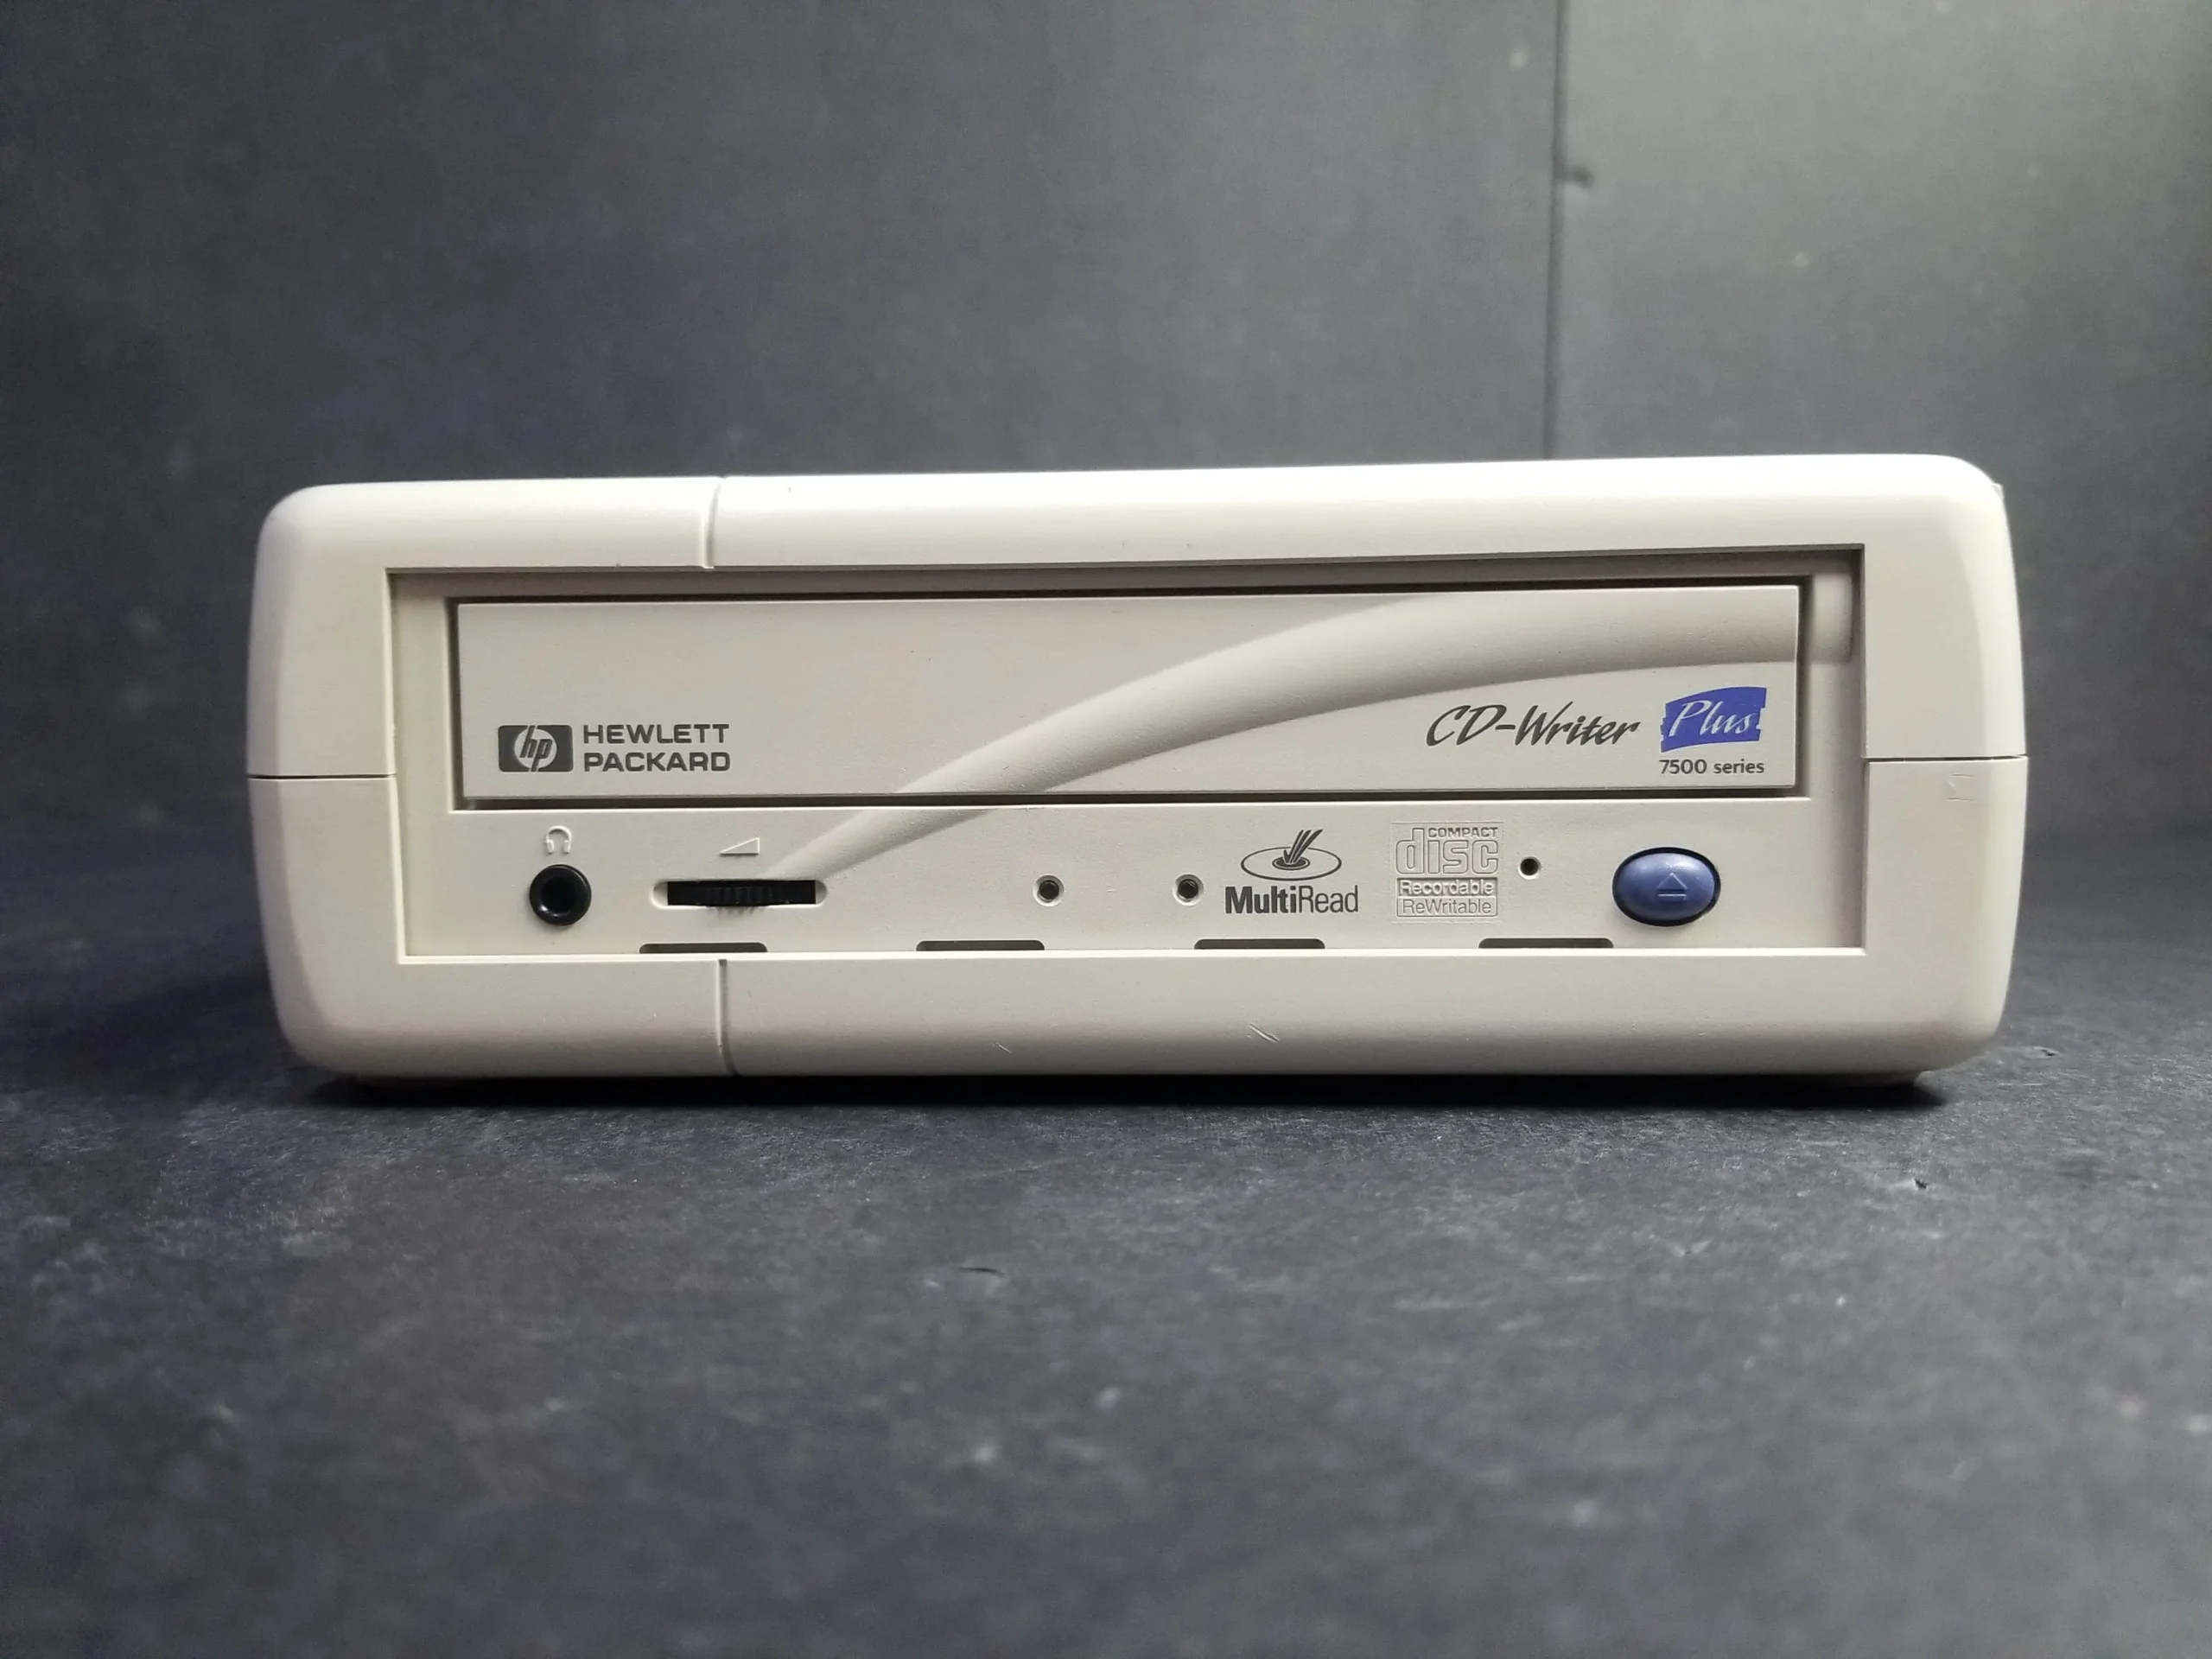 hewlett packard cd printer - What is CD ROM printer